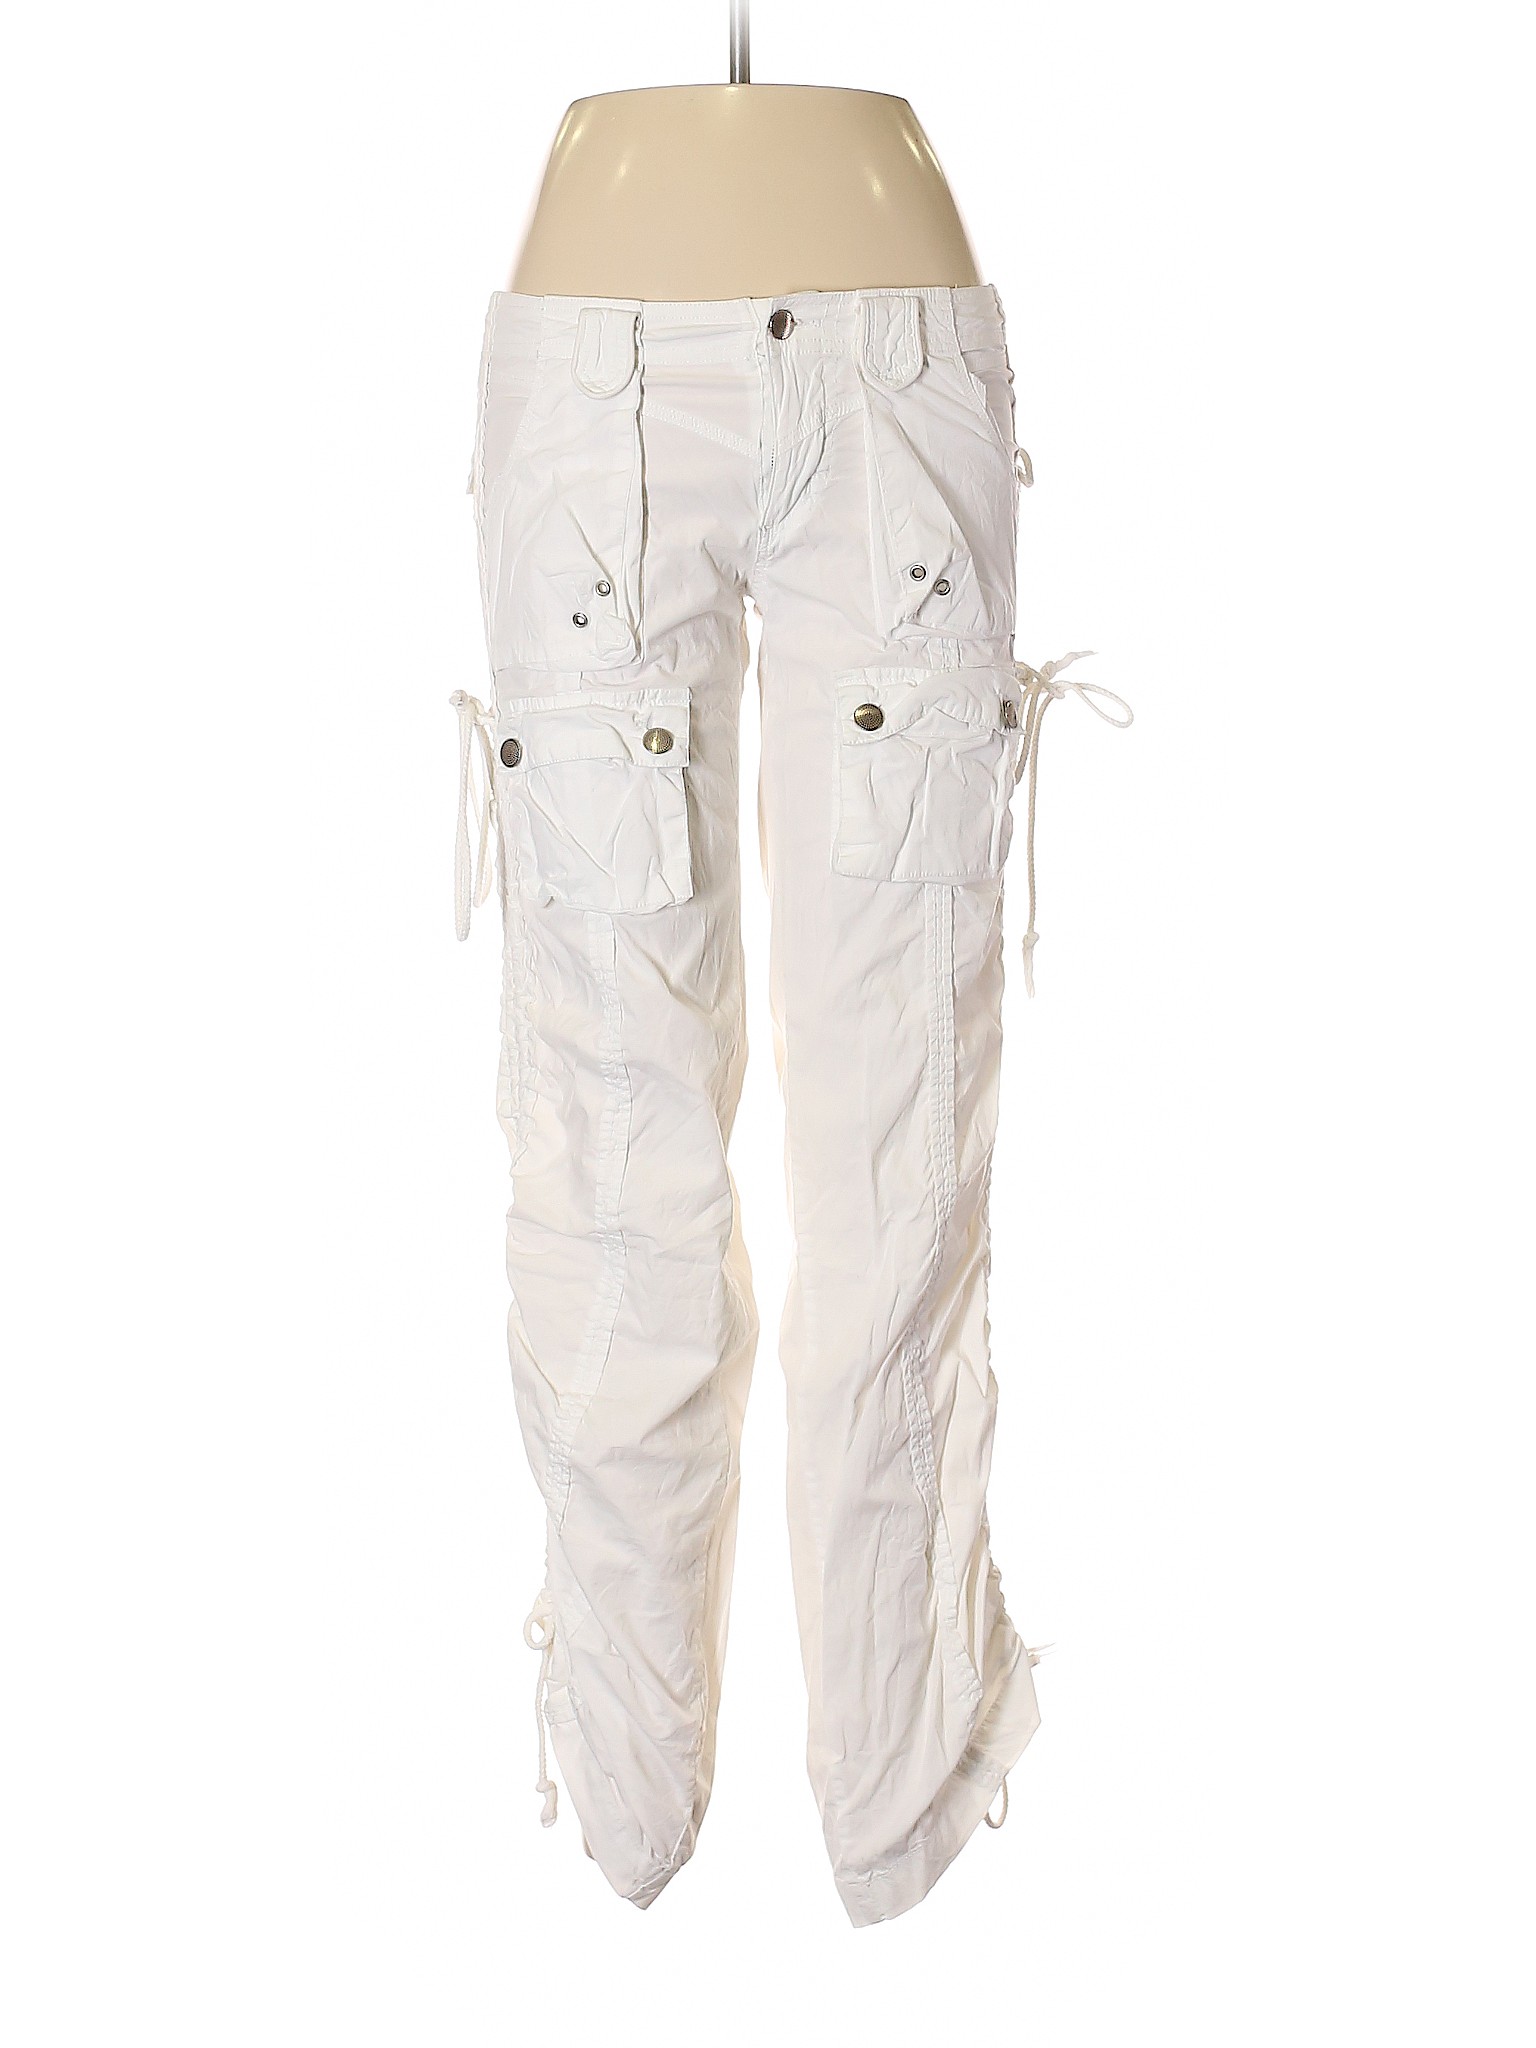 Max Rave Women White Cargo Pants 7 | eBay